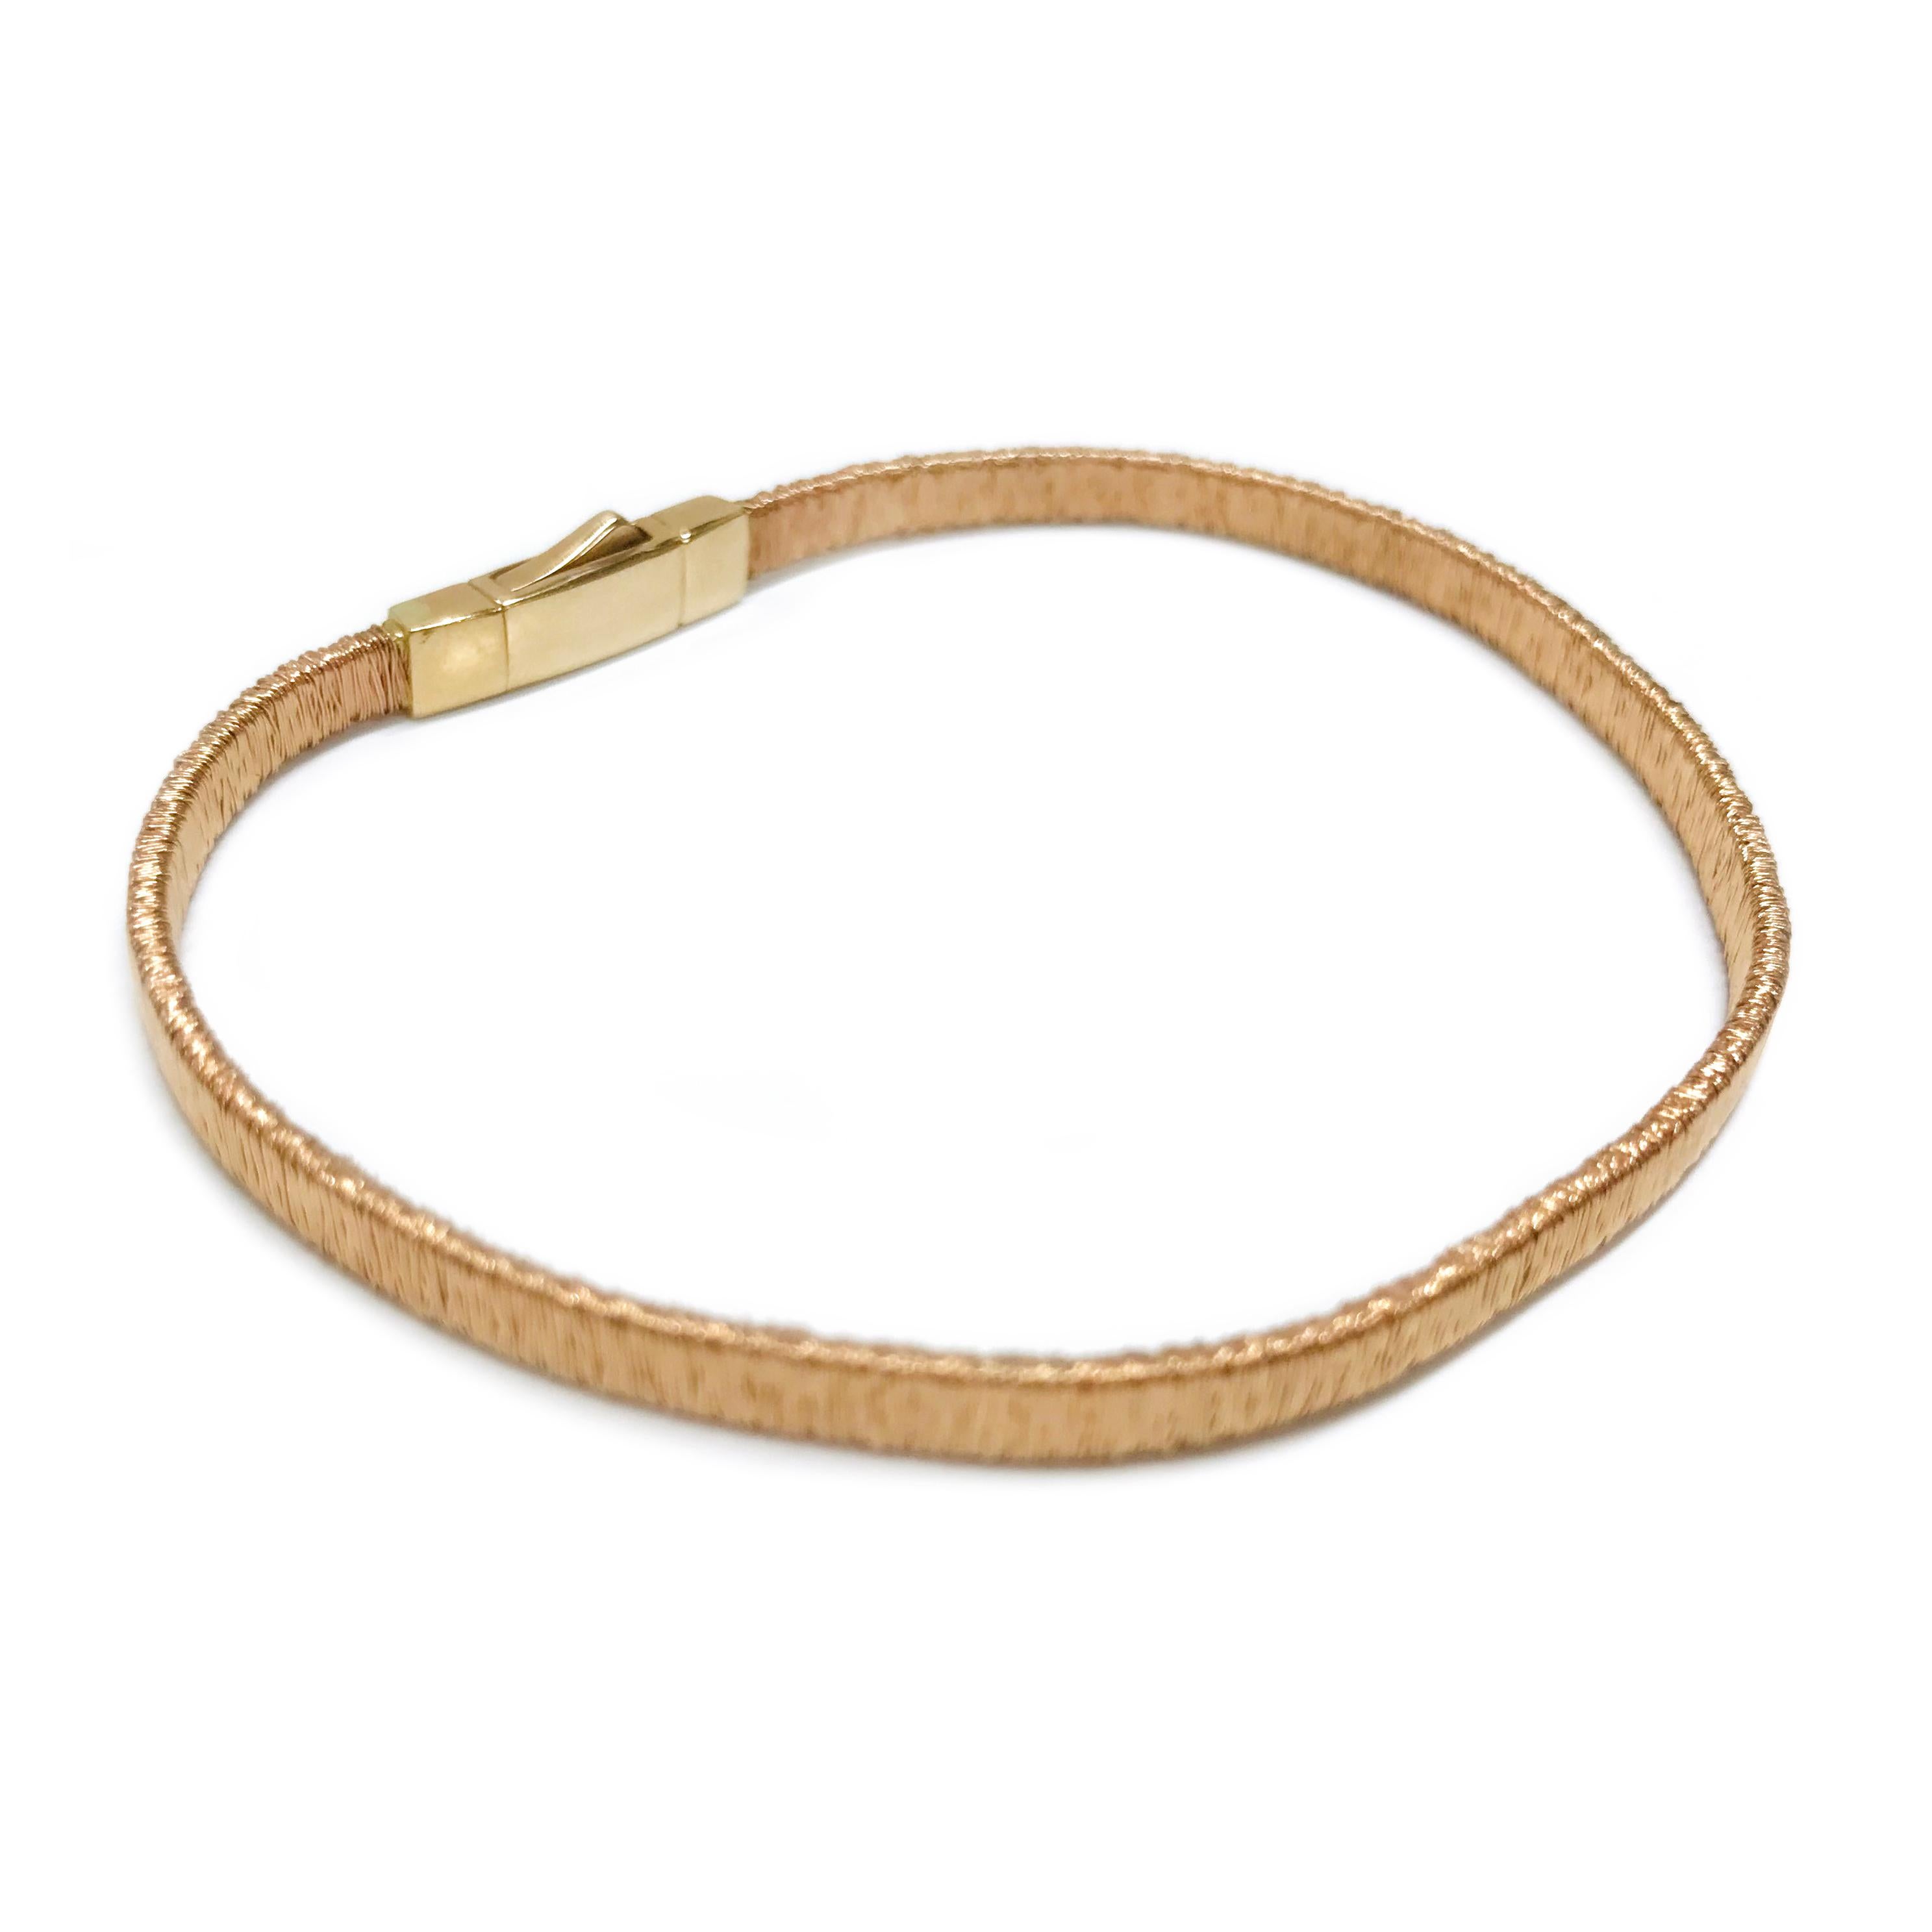 14 Karat Rose Gold Wire Bracelet. The weight light bracelet features rose gold wire wrapped all along the bracelet. The width of the bracelet is 3.75mm and it's 7 1/2